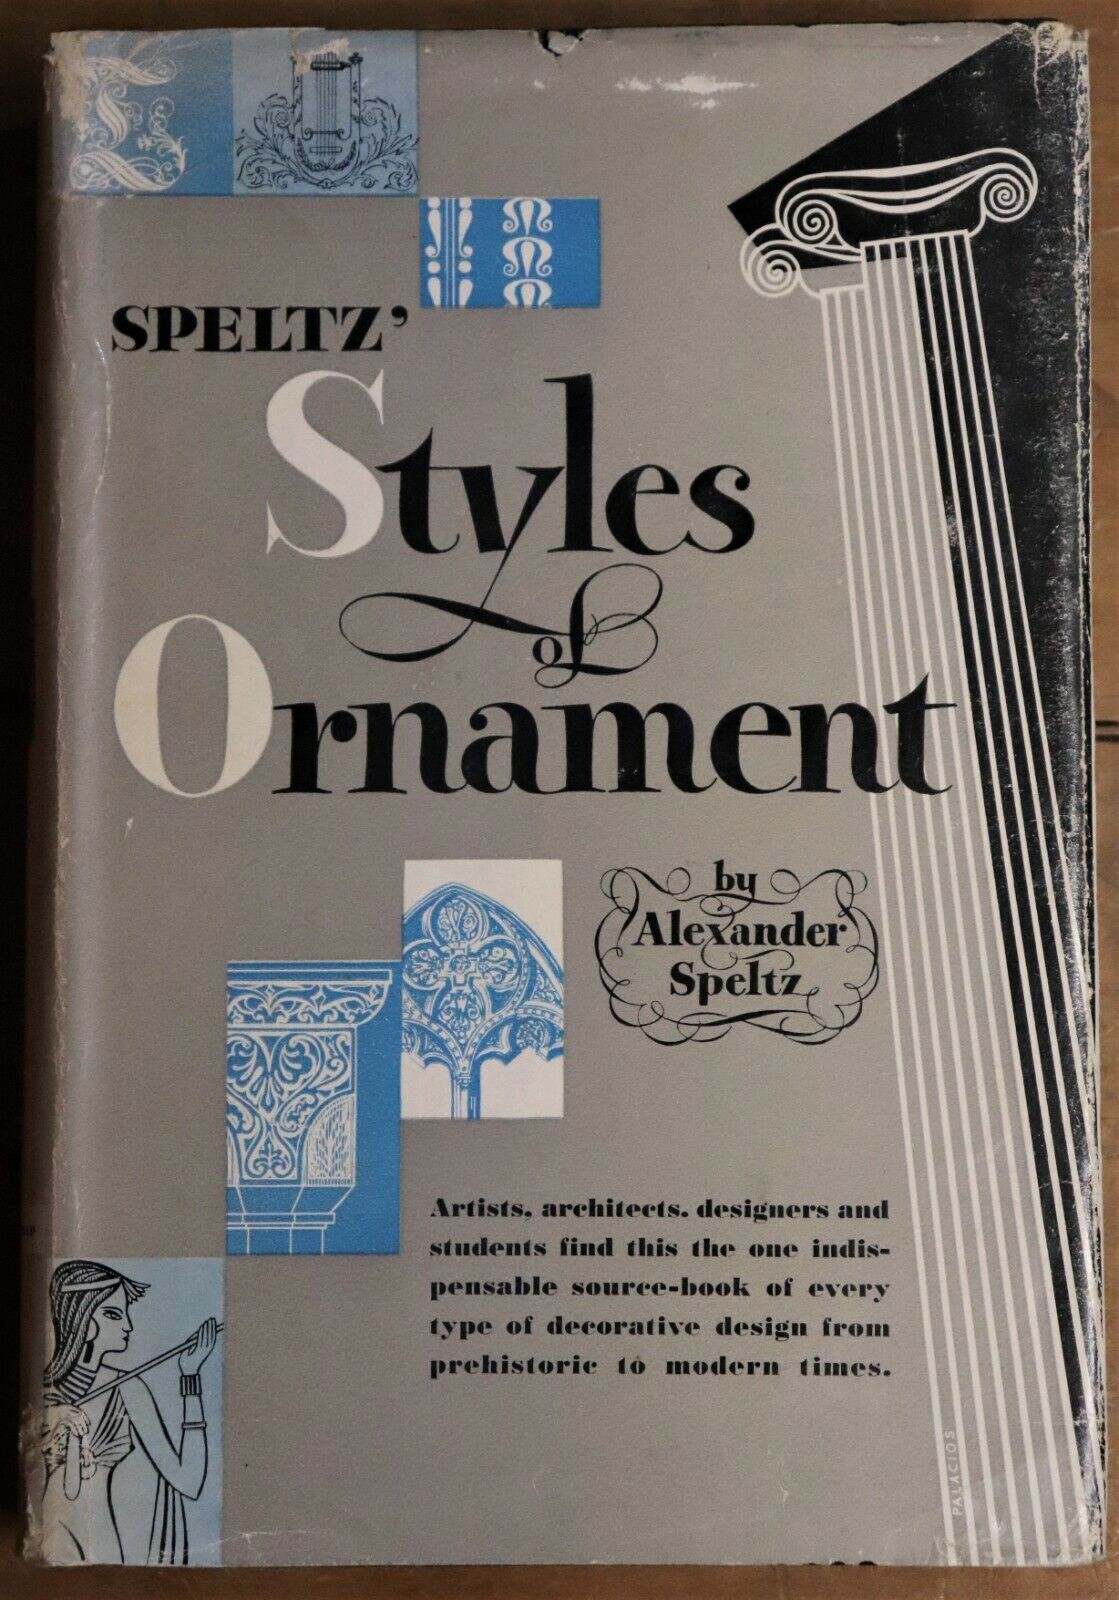 Styles Of Ornament - Alexander Speltz - c1936 - Antique Architecture Book